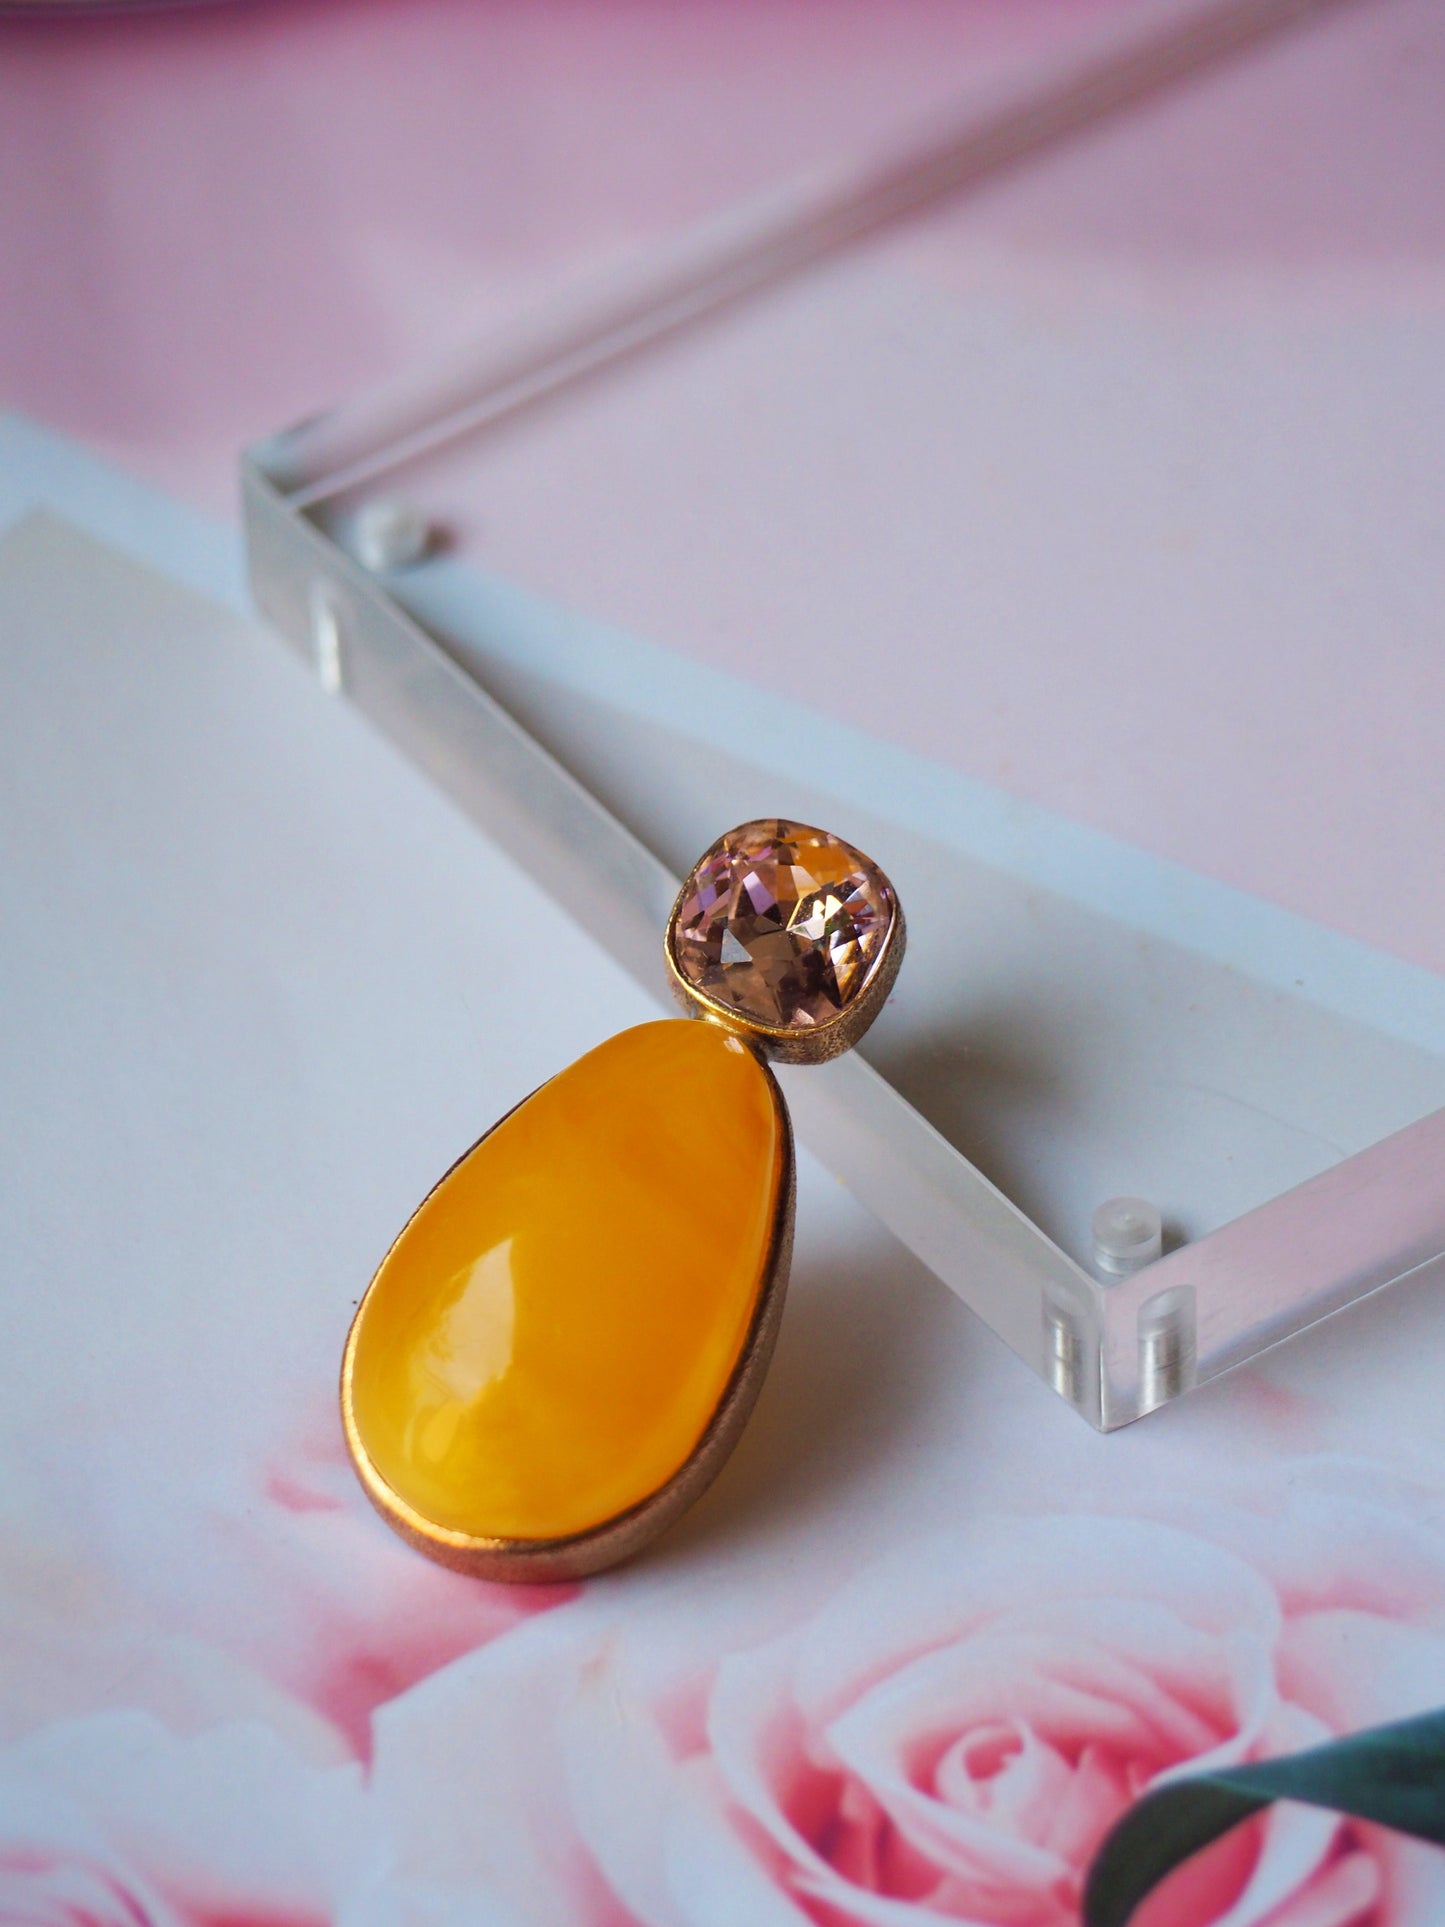 Big Honey Amber Pendant with Swarovski's Crystal